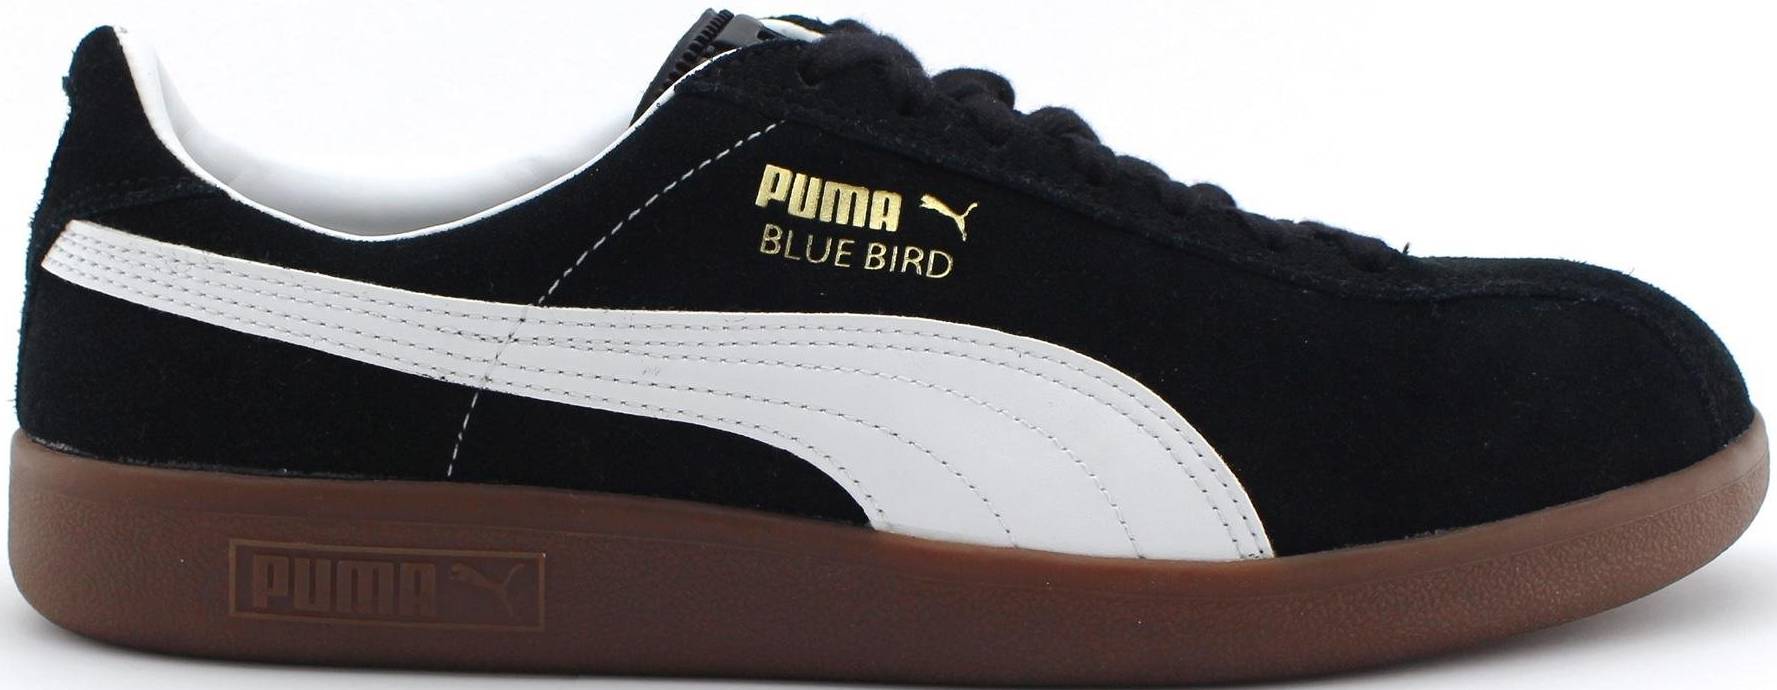 11 Reasons to/NOT to Buy Puma Bluebird 